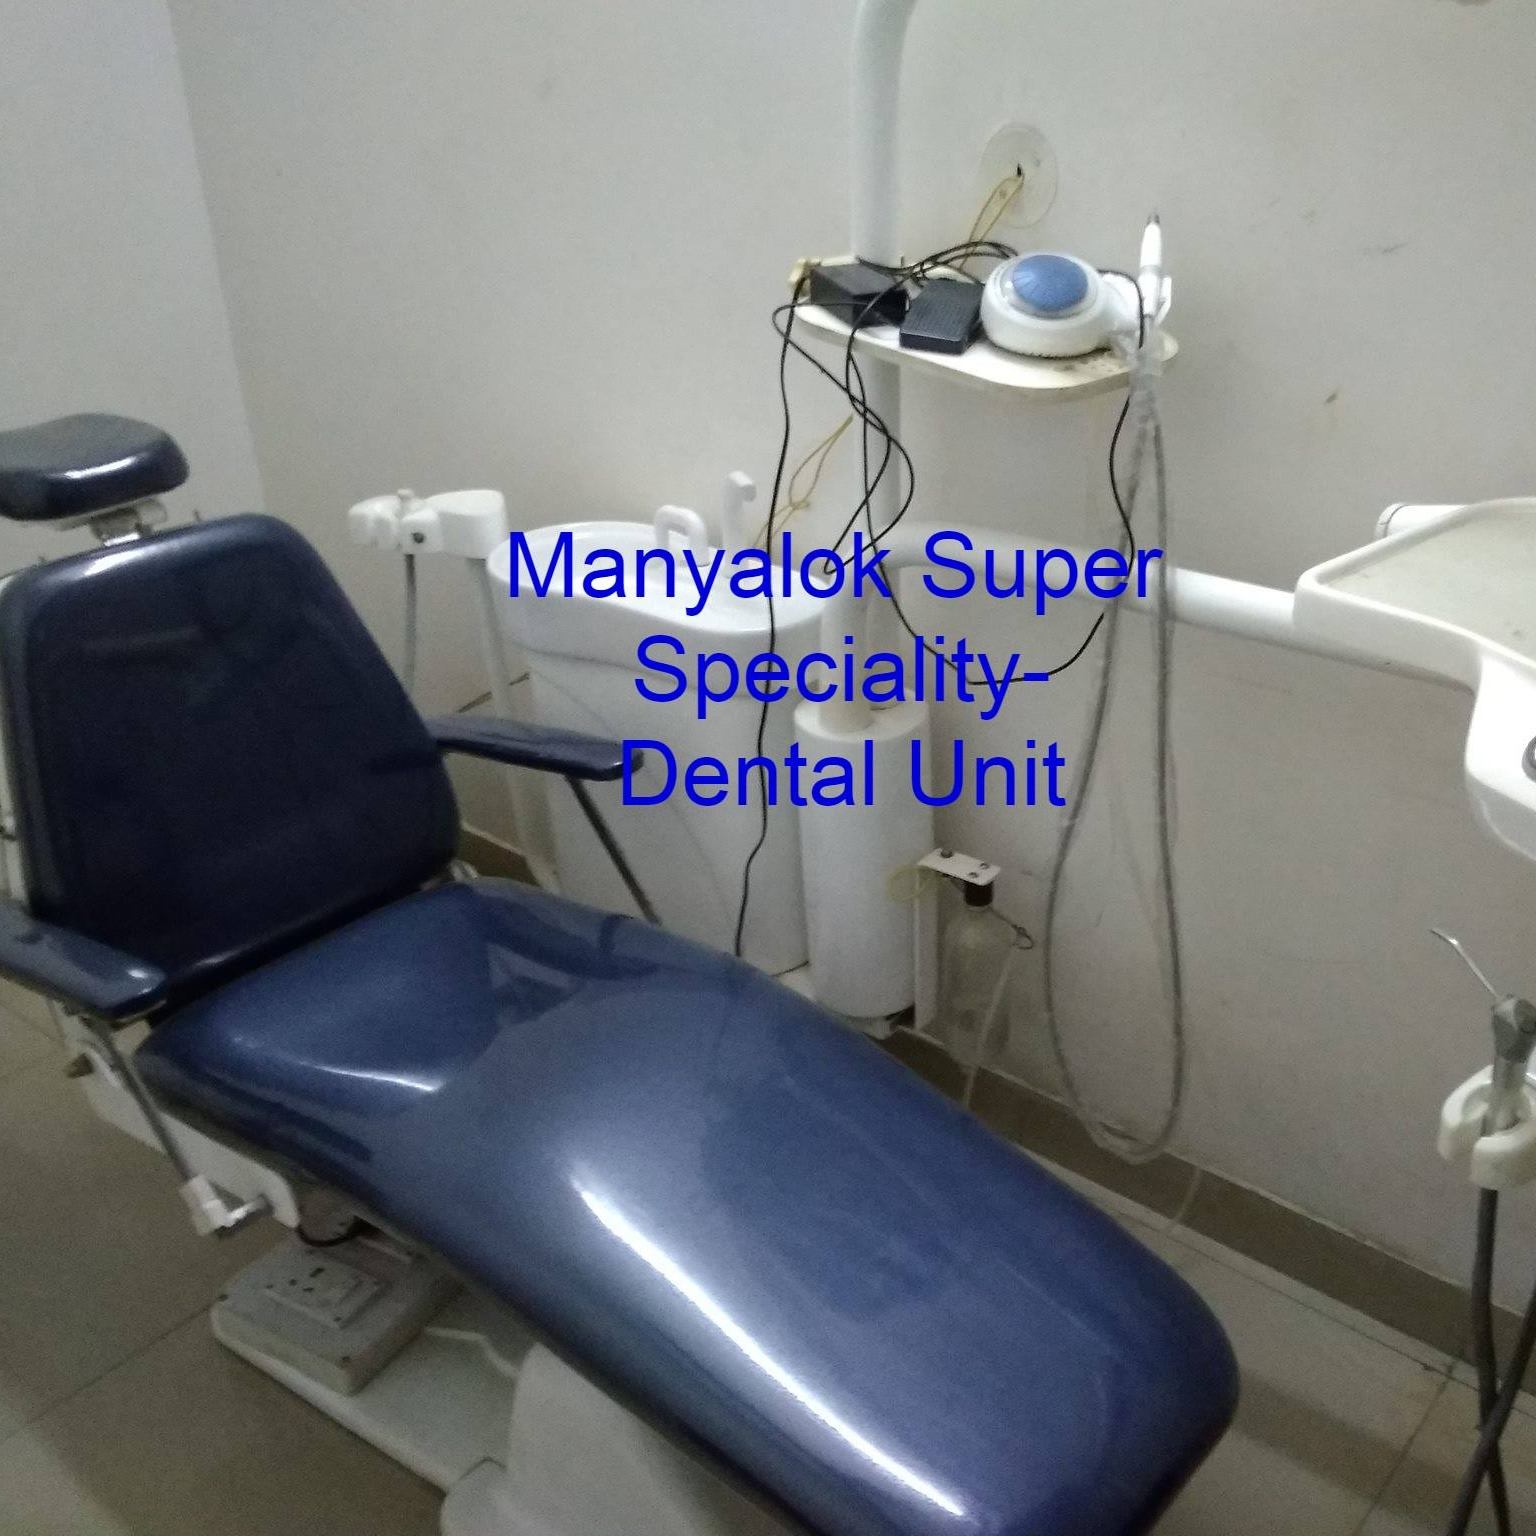 Manyalok Superspeciality - Orthodontics Implant & Pediatric Dentistry|Hospitals|Medical Services